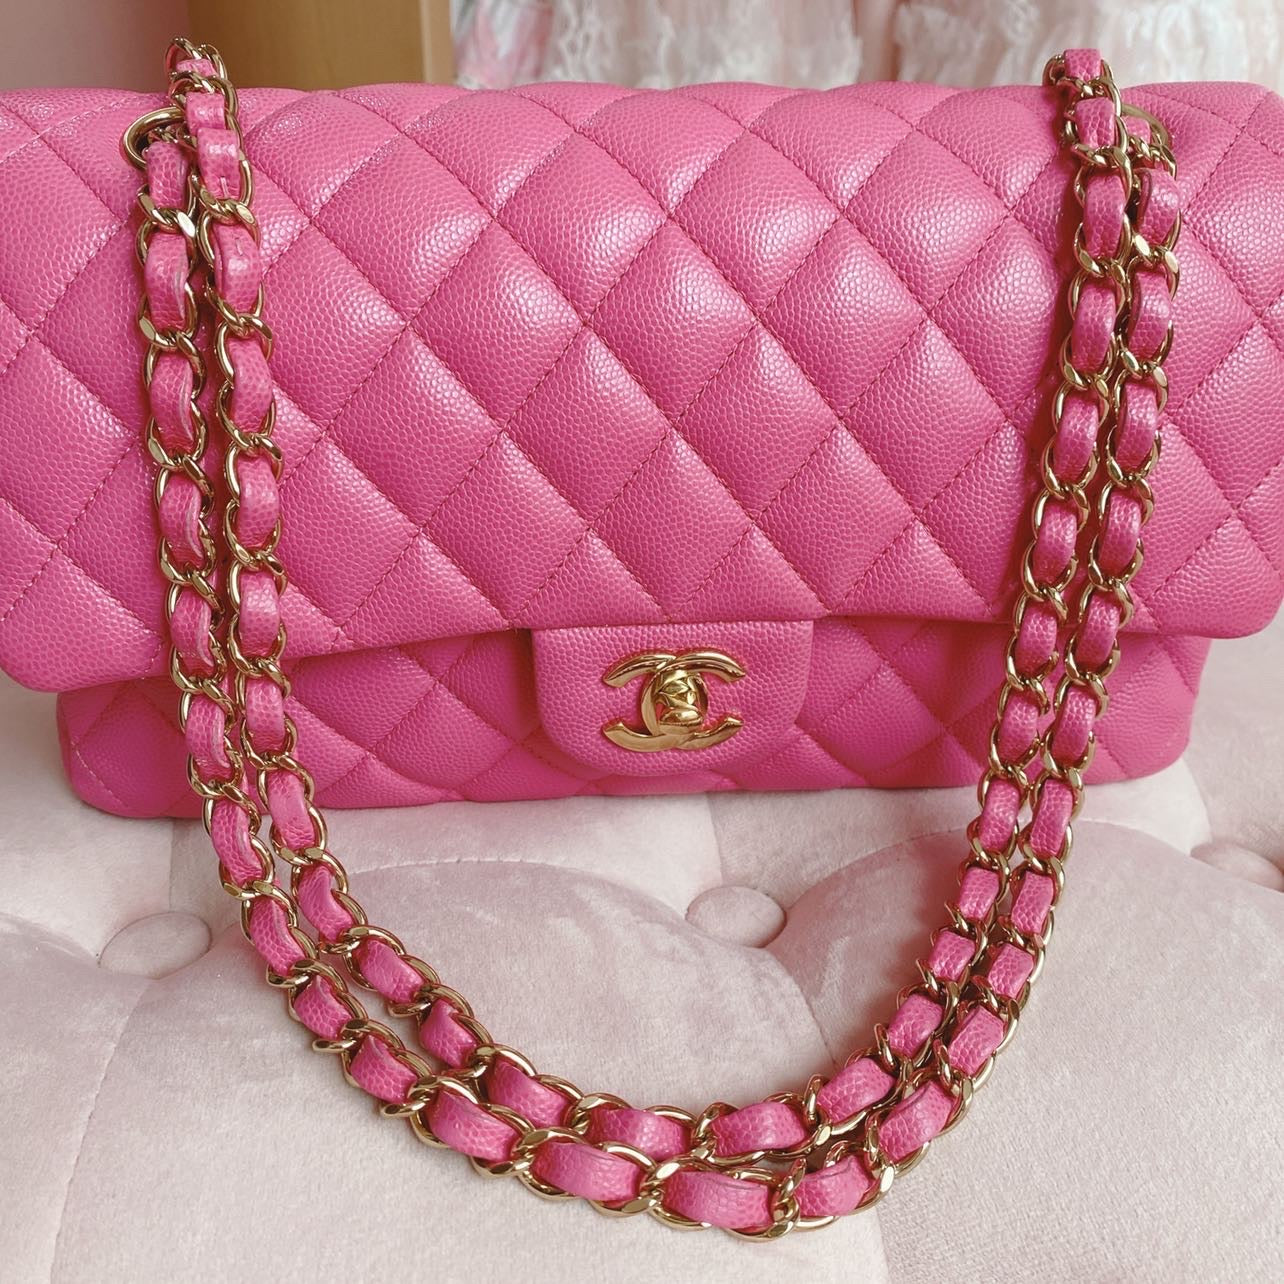 Pink Chanel Bag - 367 For Sale on 1stDibs  chanel pink bags, small pink  chanel bag, chanel bag hot pink